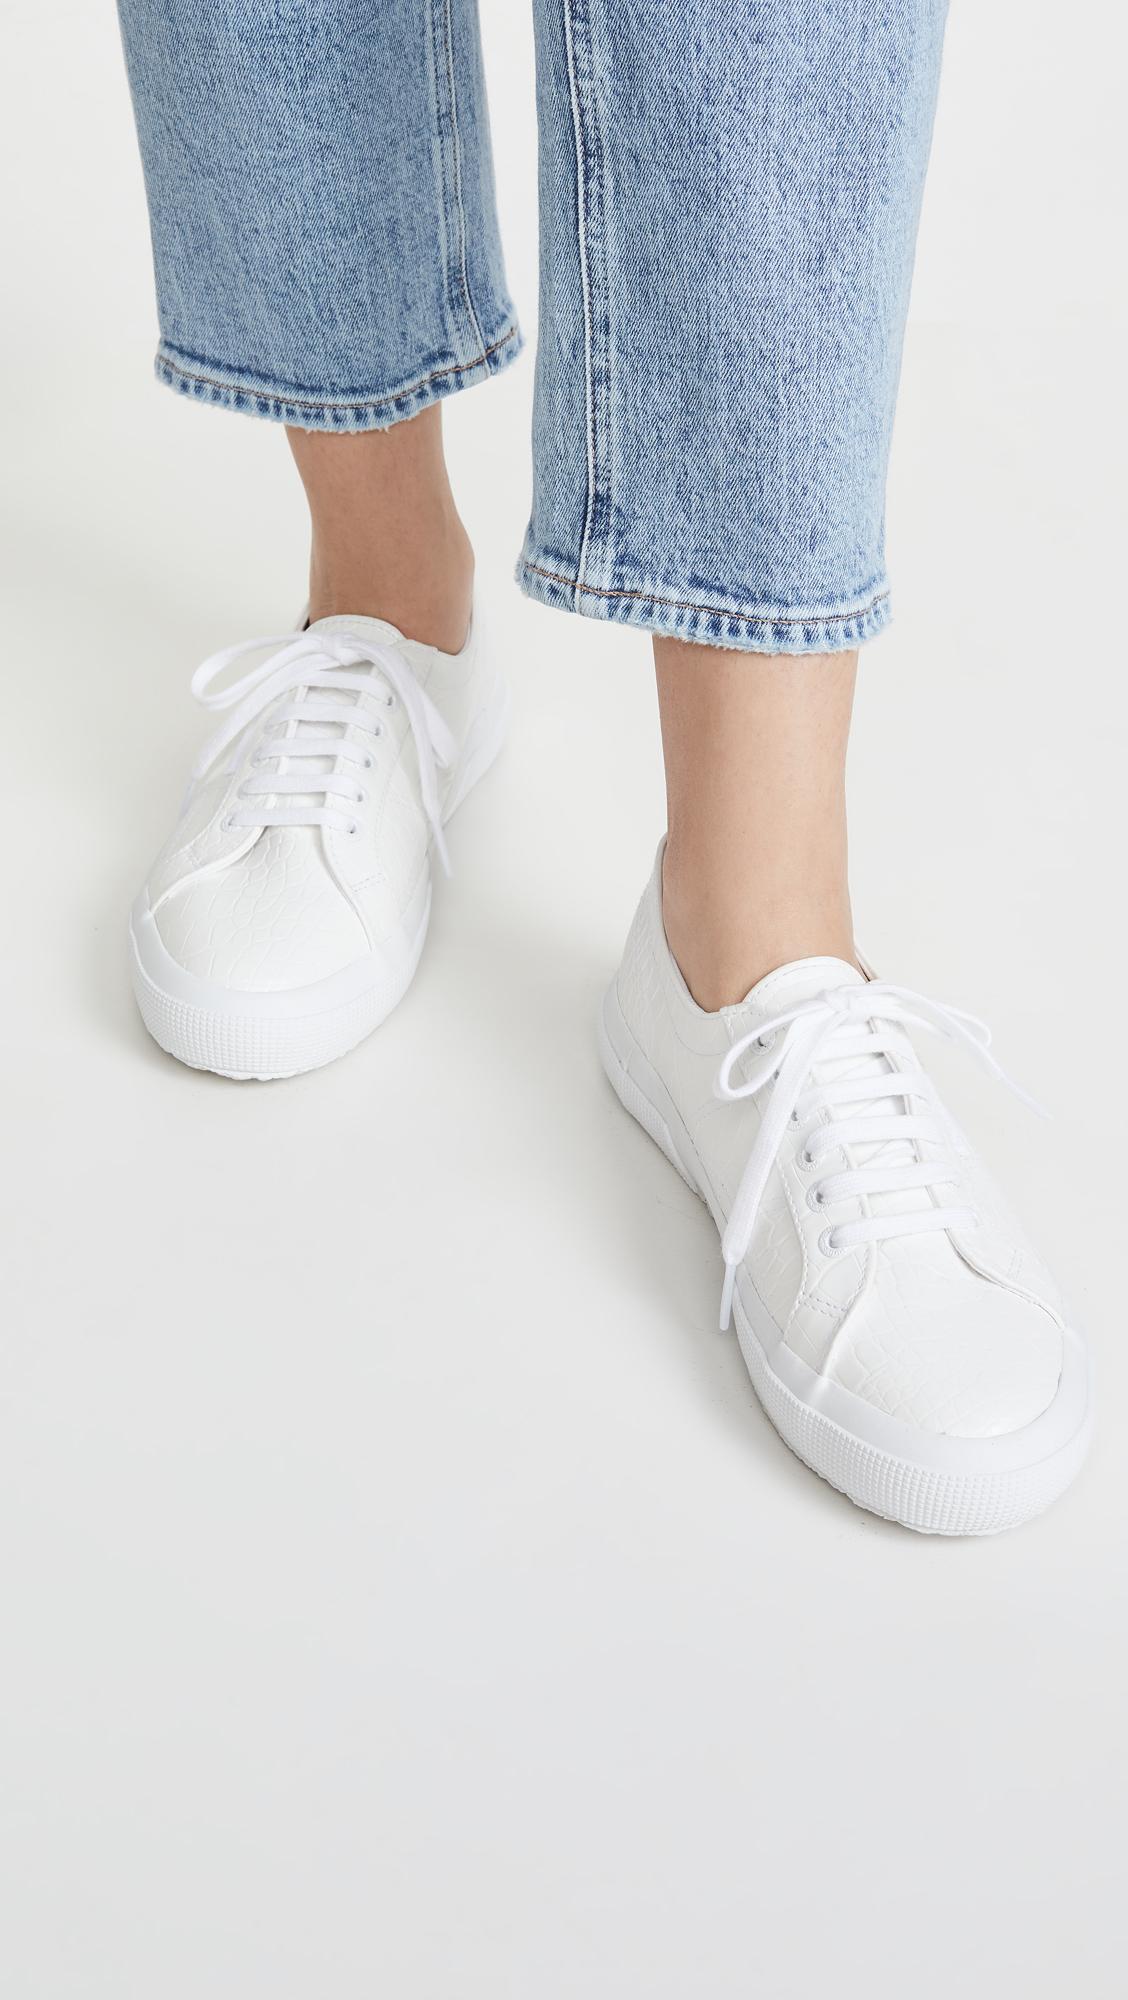 Superga 2750 Syntcrocodilew Sneakers in White Croc (White) | Lyst